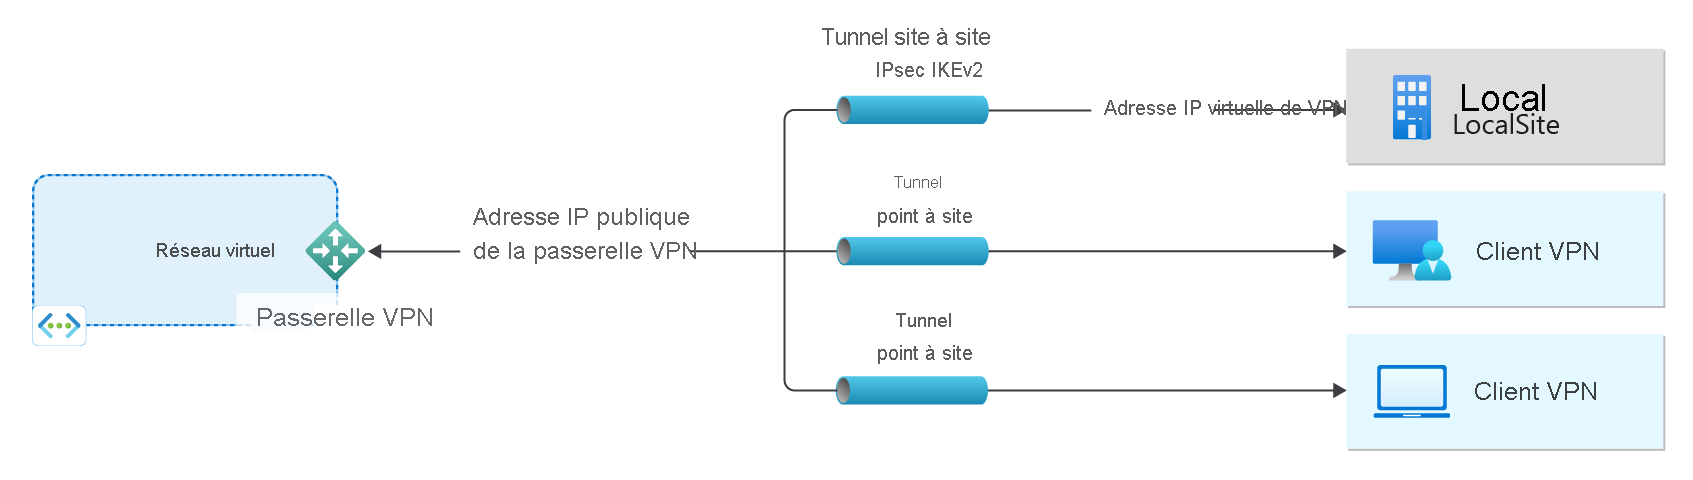 Diagram that shows a virtual network and a VPN gateway.